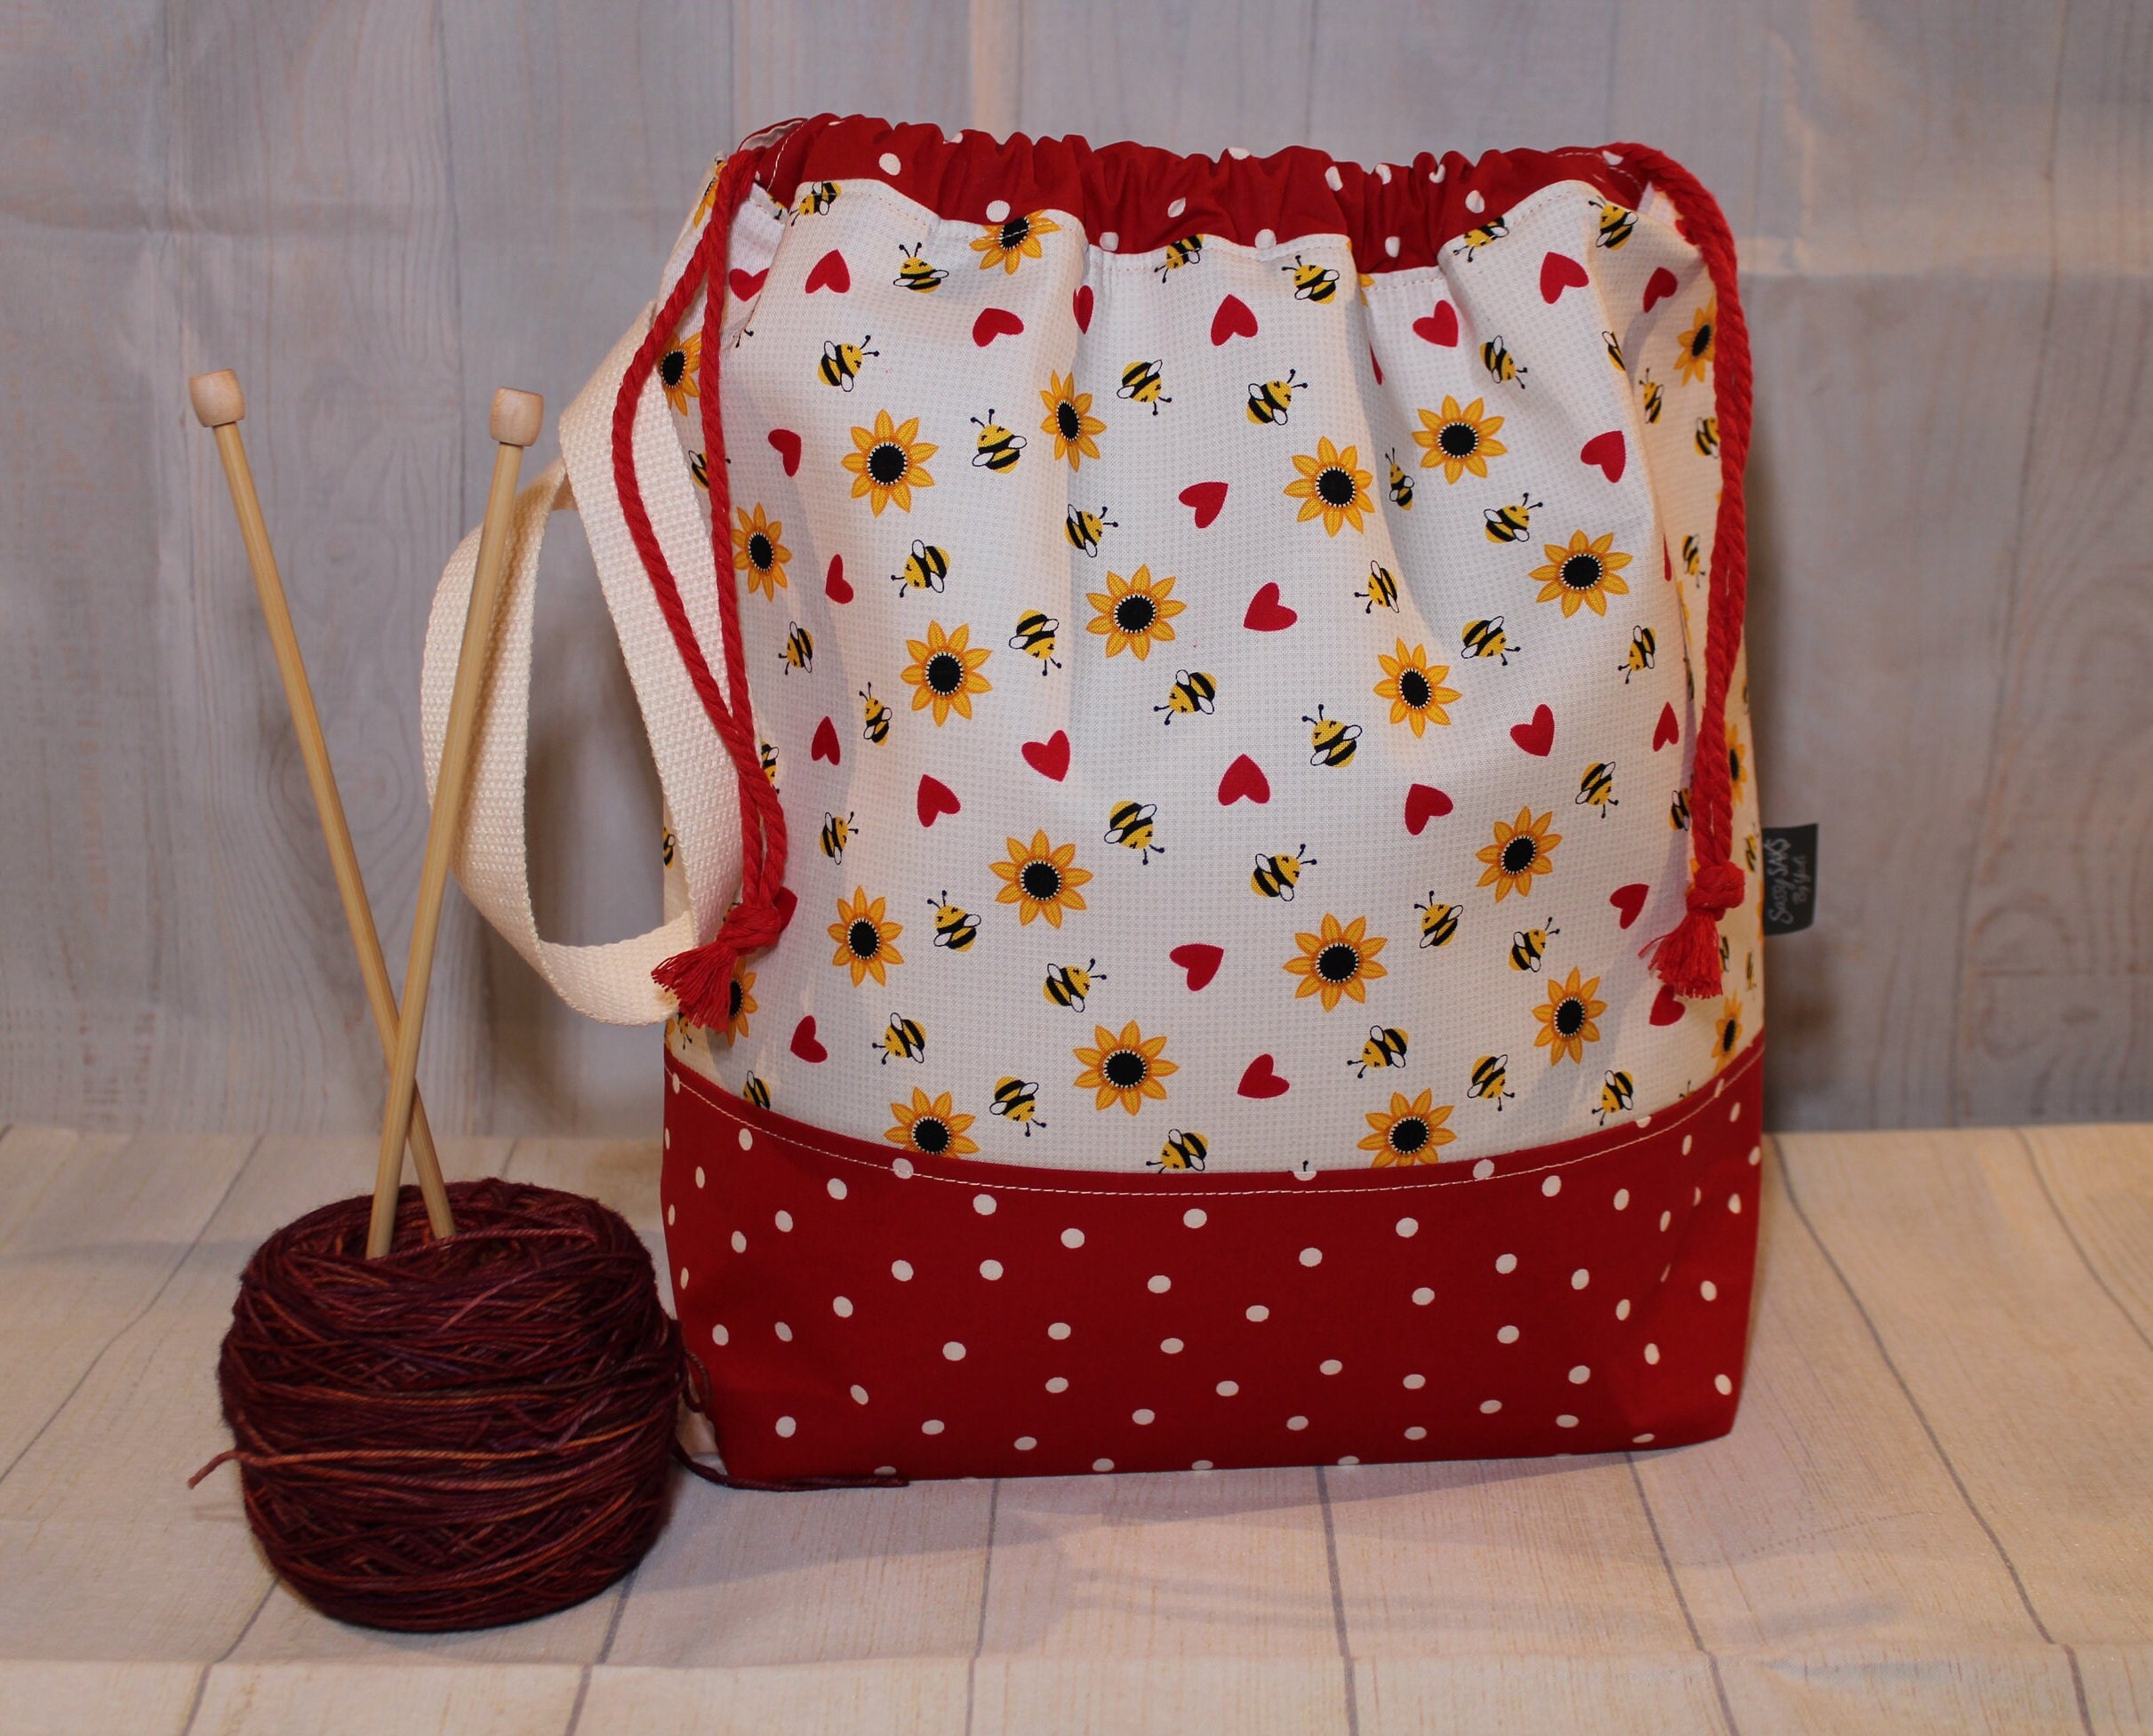 Craft & Knitting Bag 'Bees' Design by Emma Ball PVC Lots of Pockets